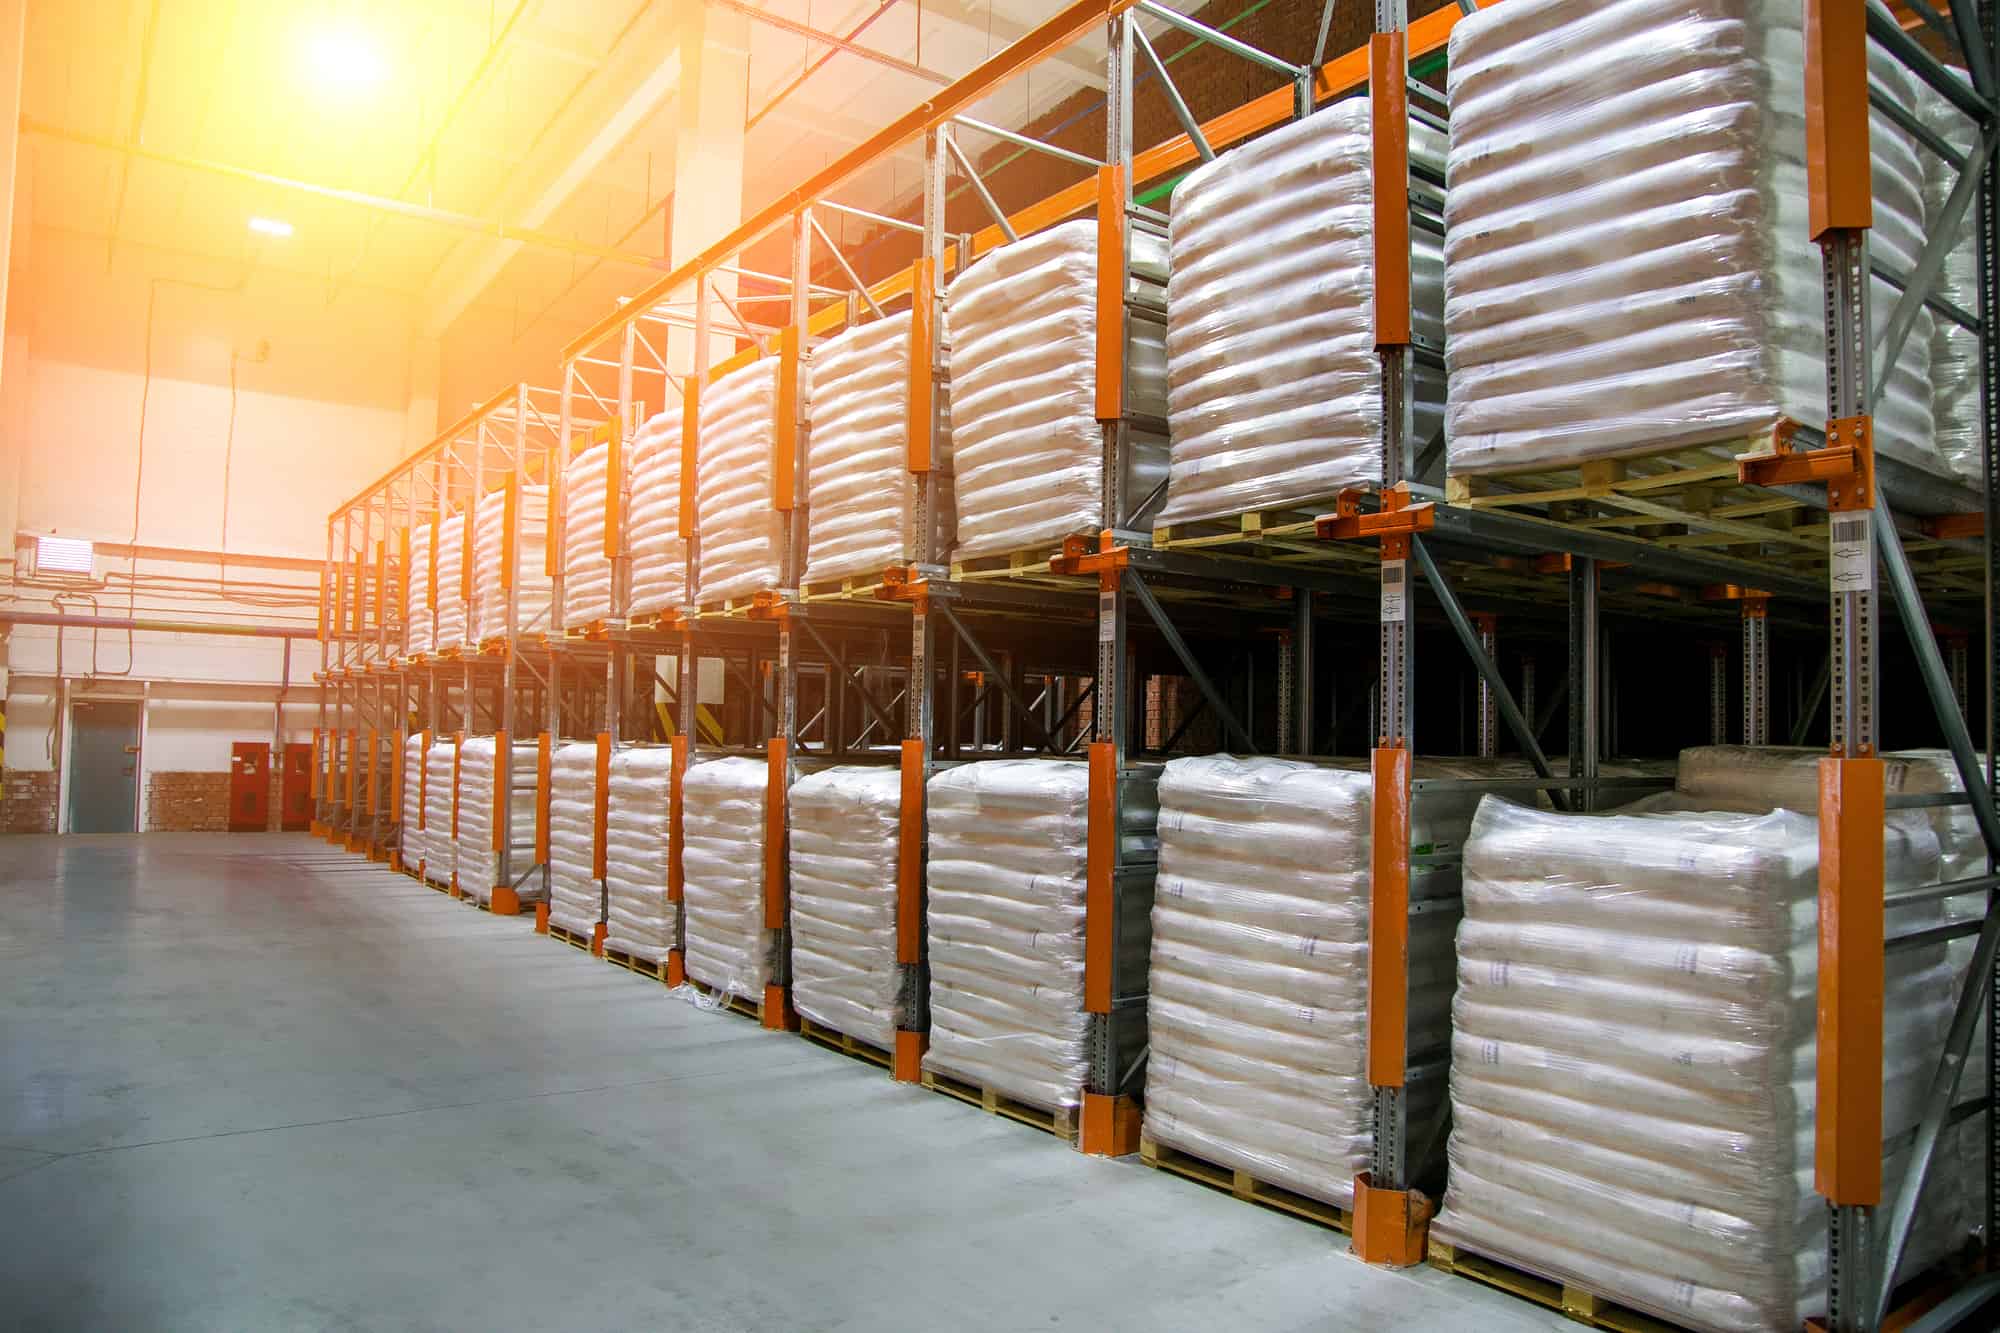 hangar warehouse with rows of shelves with white polyethylene ba